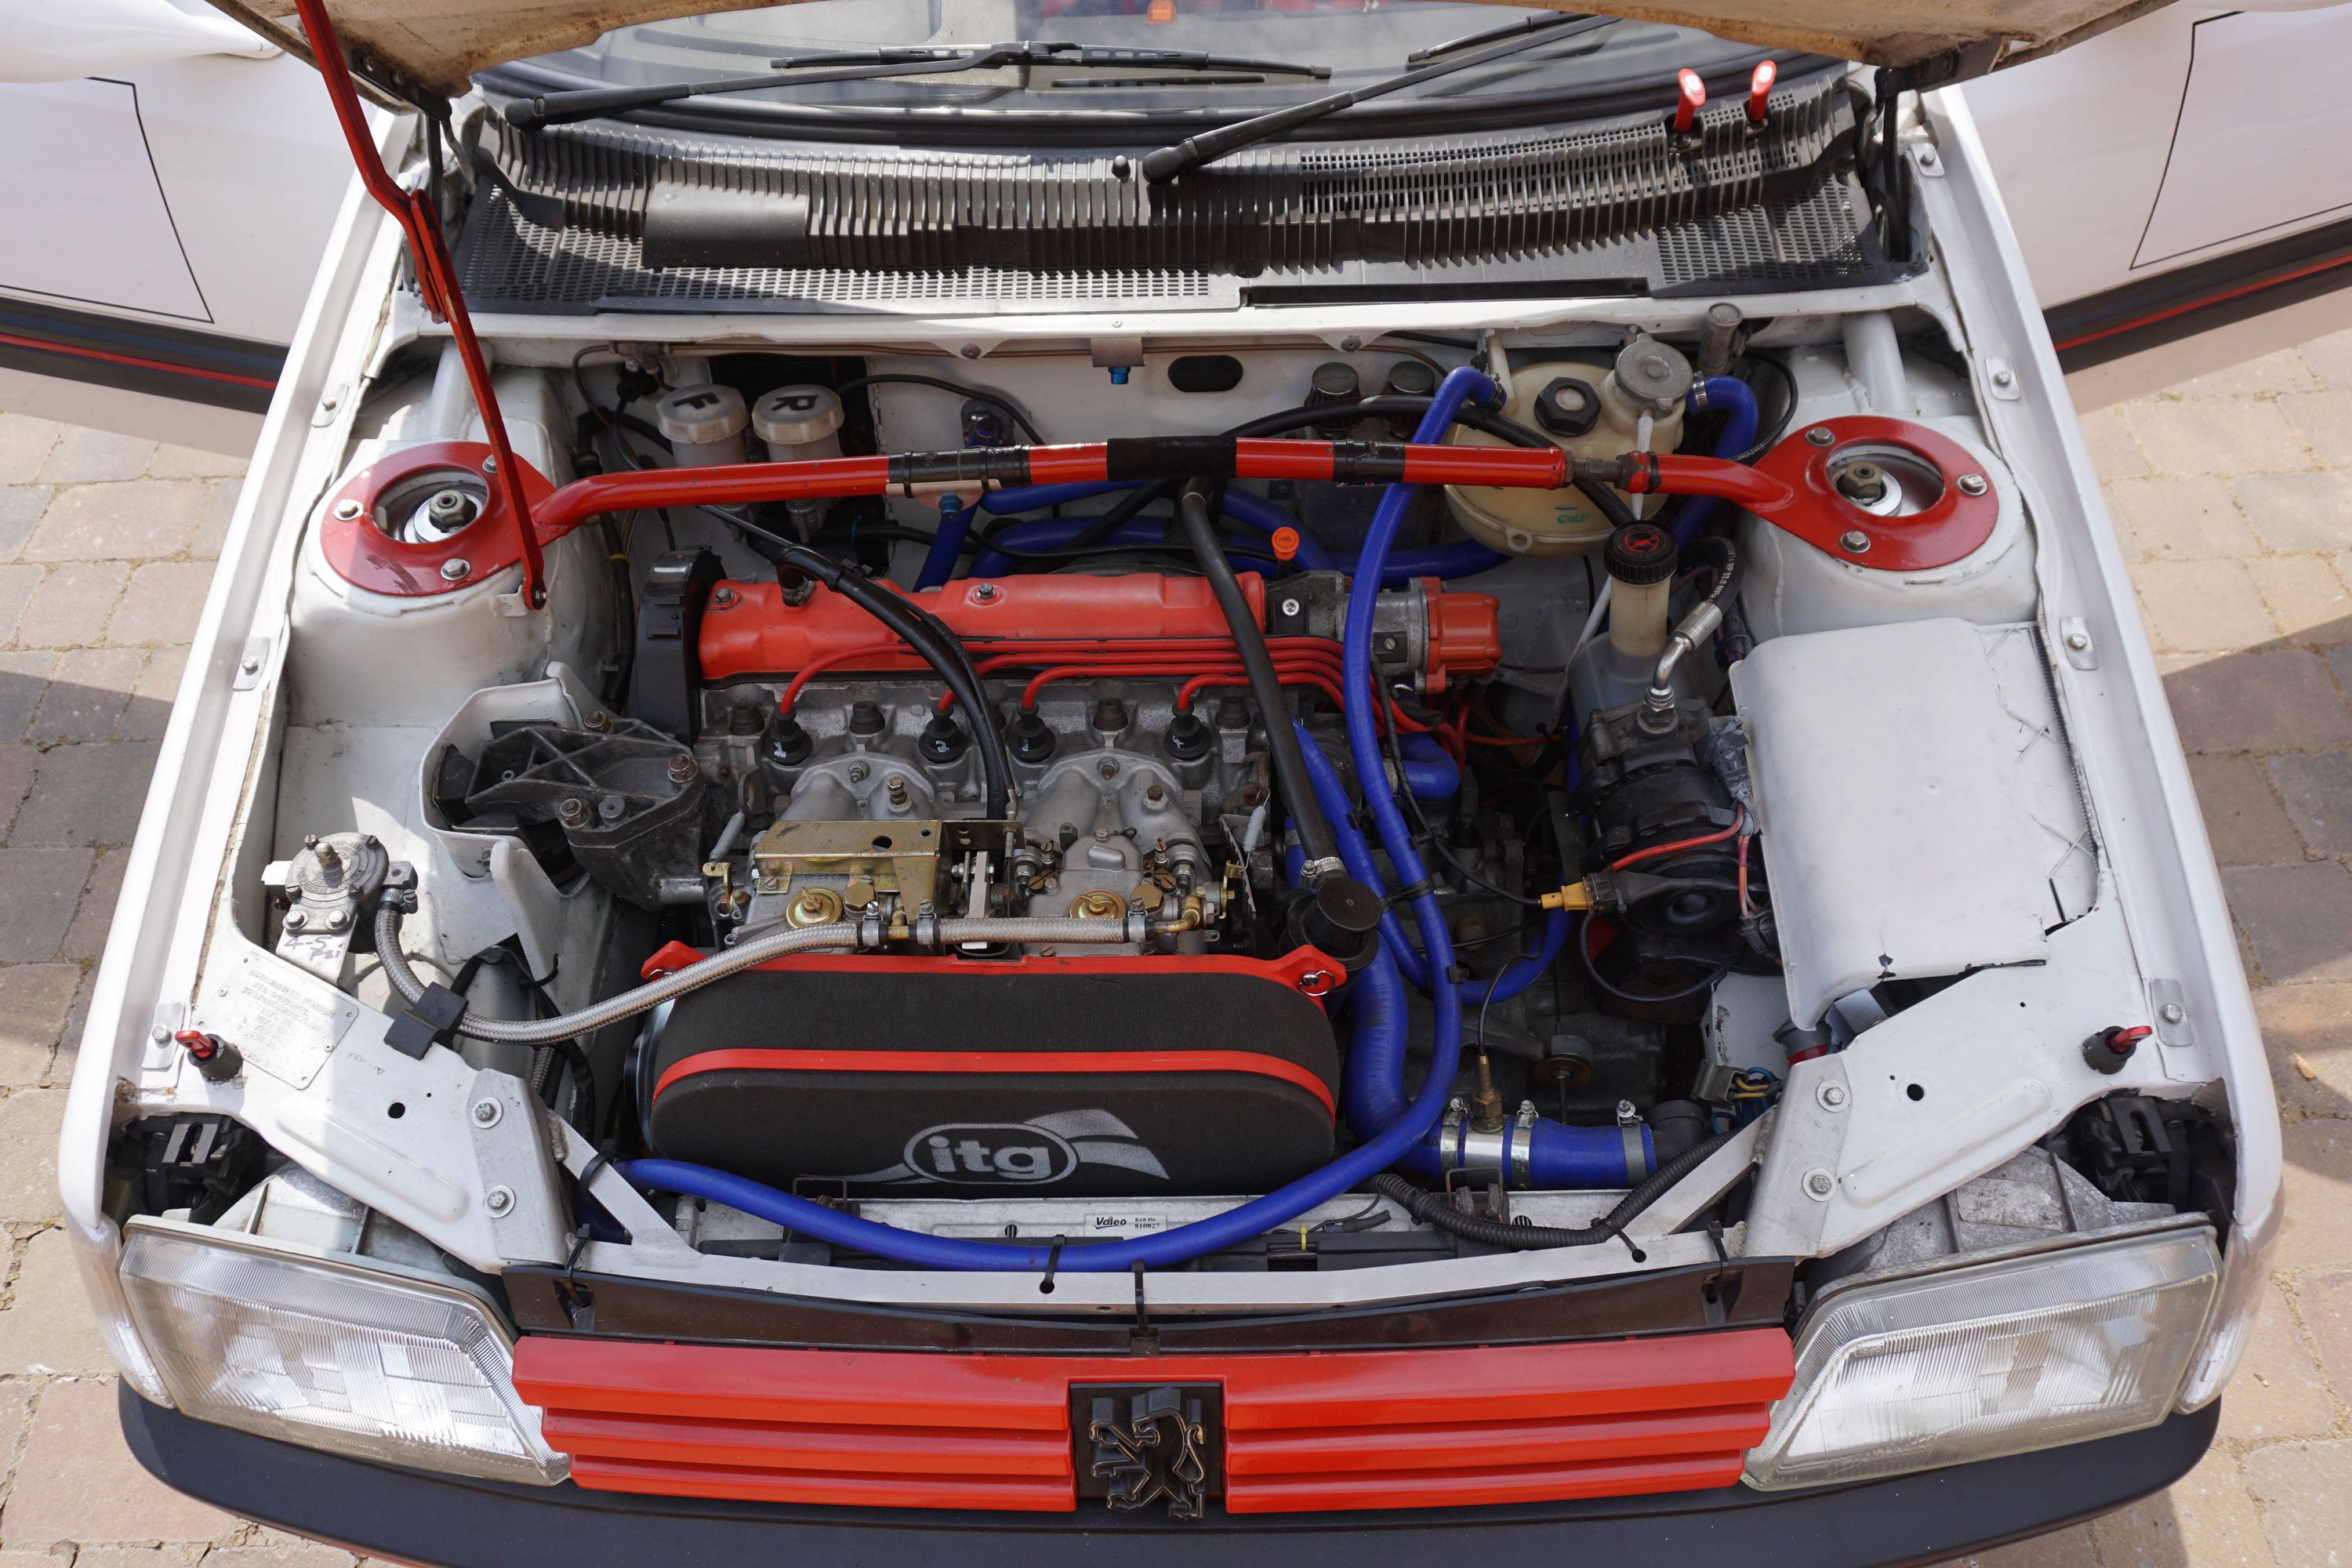 Peugeot 205 GTi 1.6 Rally Car